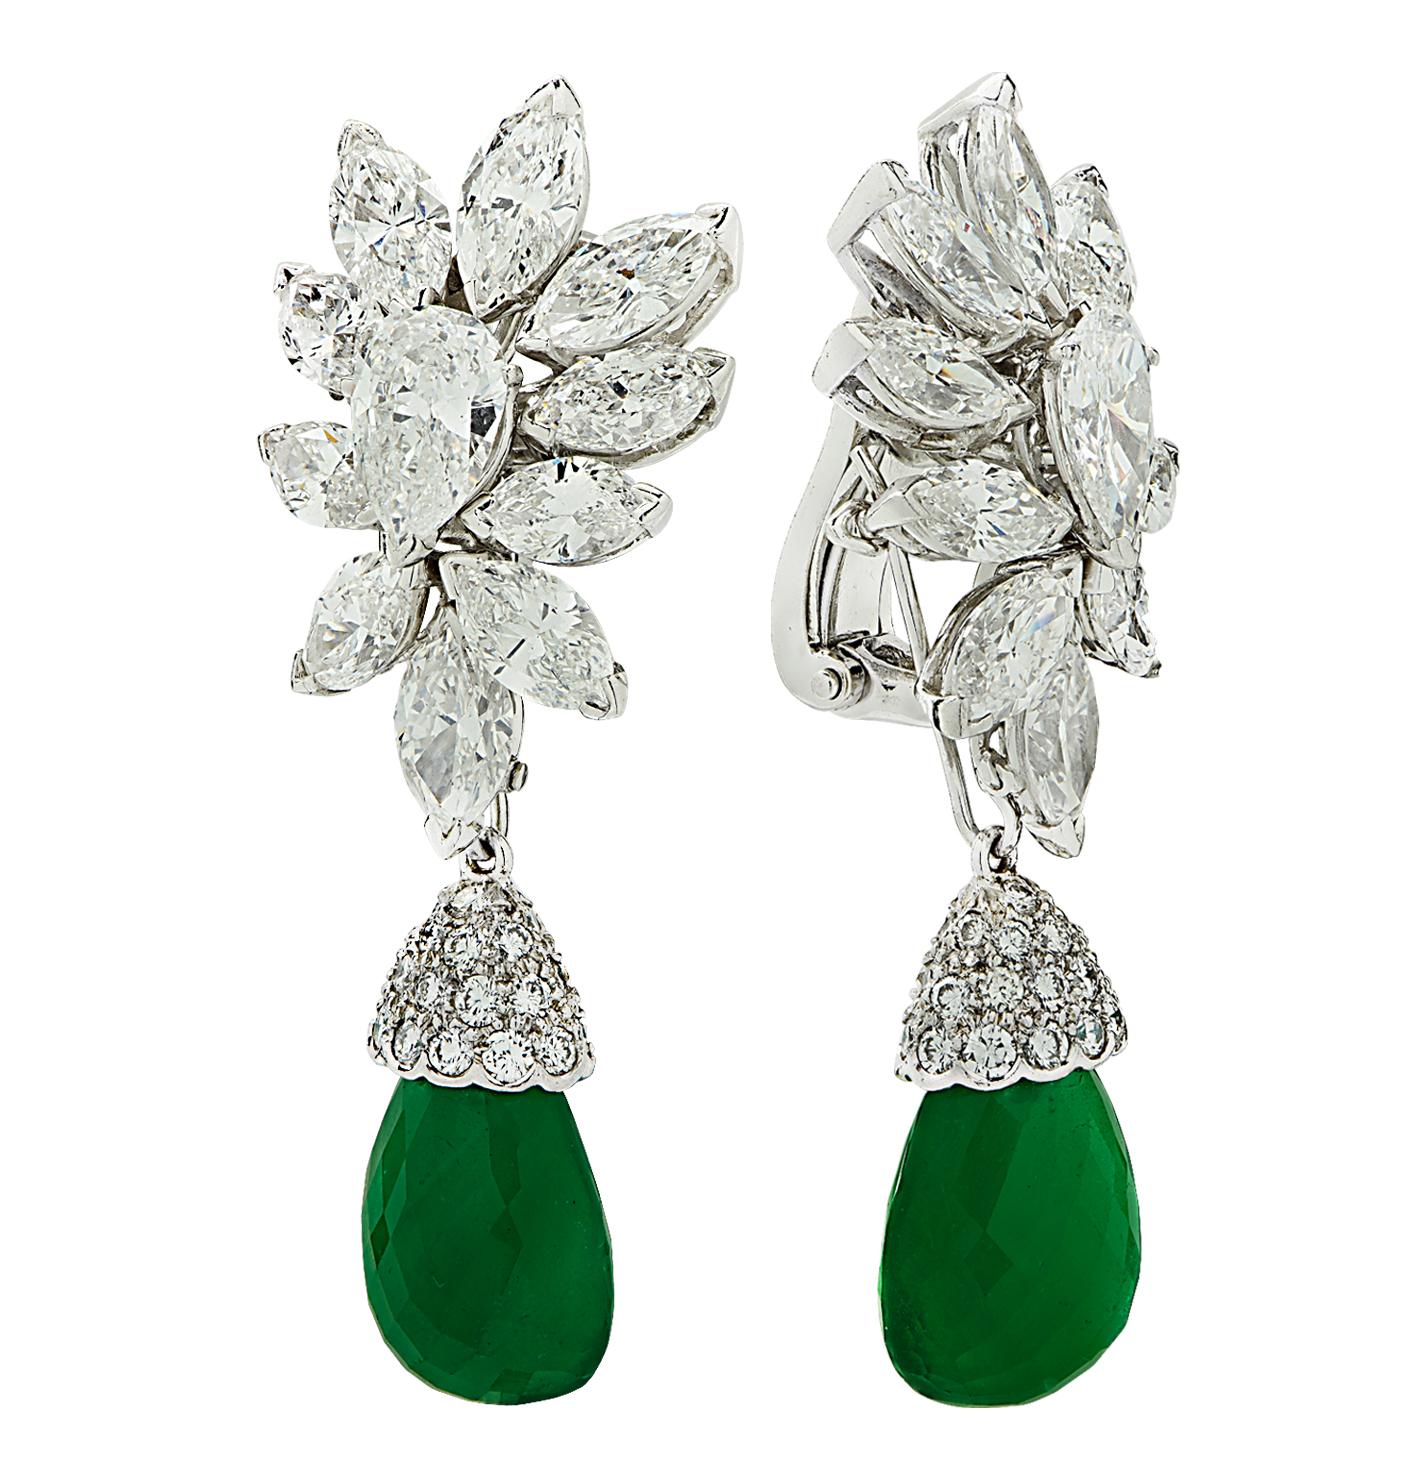 Emerald Cut Van Cleef & Arpels Colombian Emerald & 12 Carat Diamond Day & Night Earrings